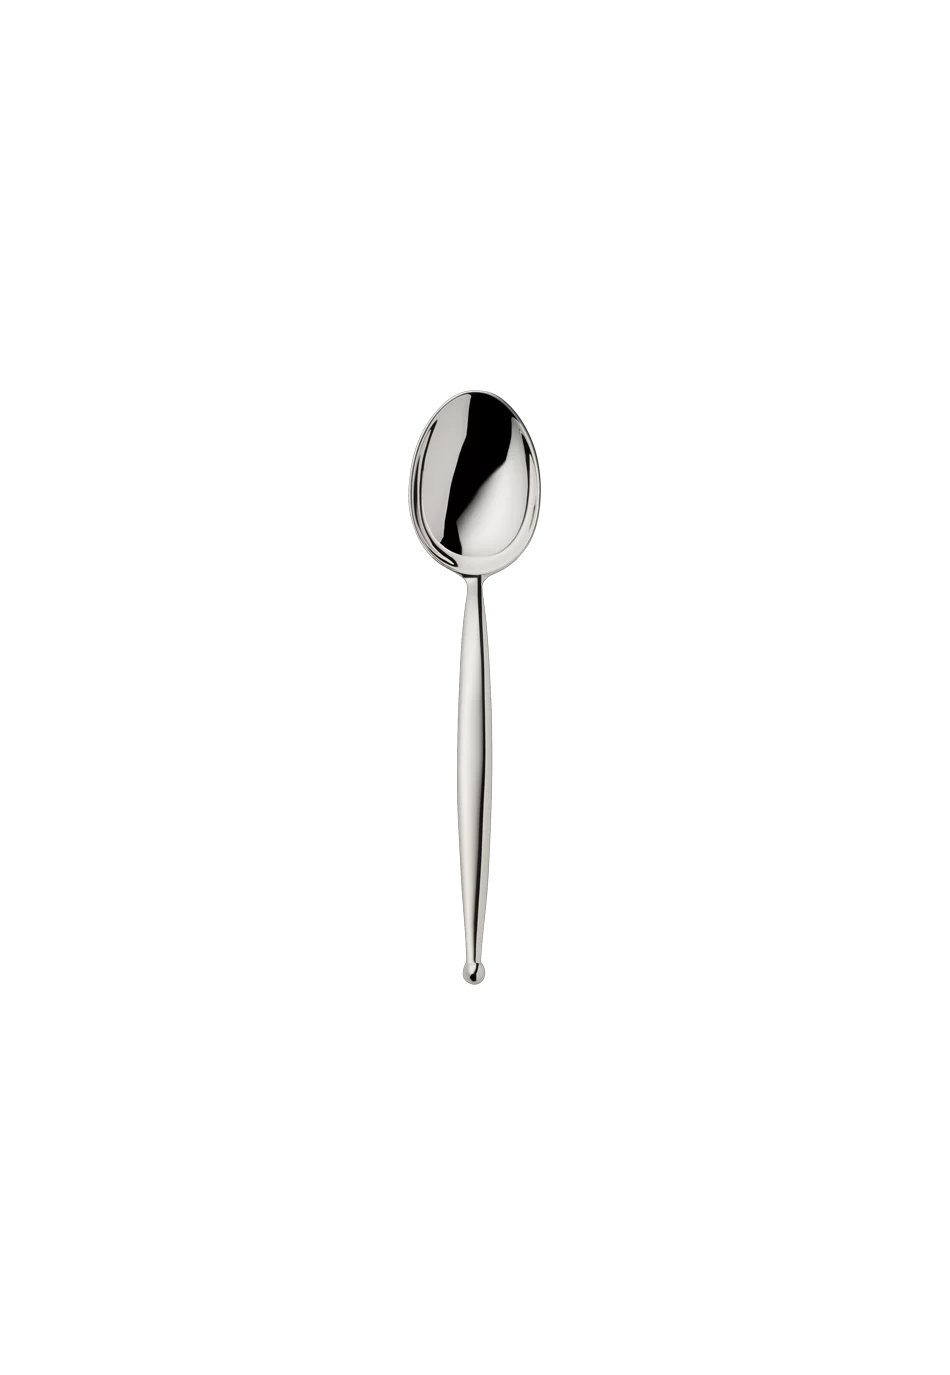 Gio Coffee Spoon 13,0 Cm (150g massive silverplated)